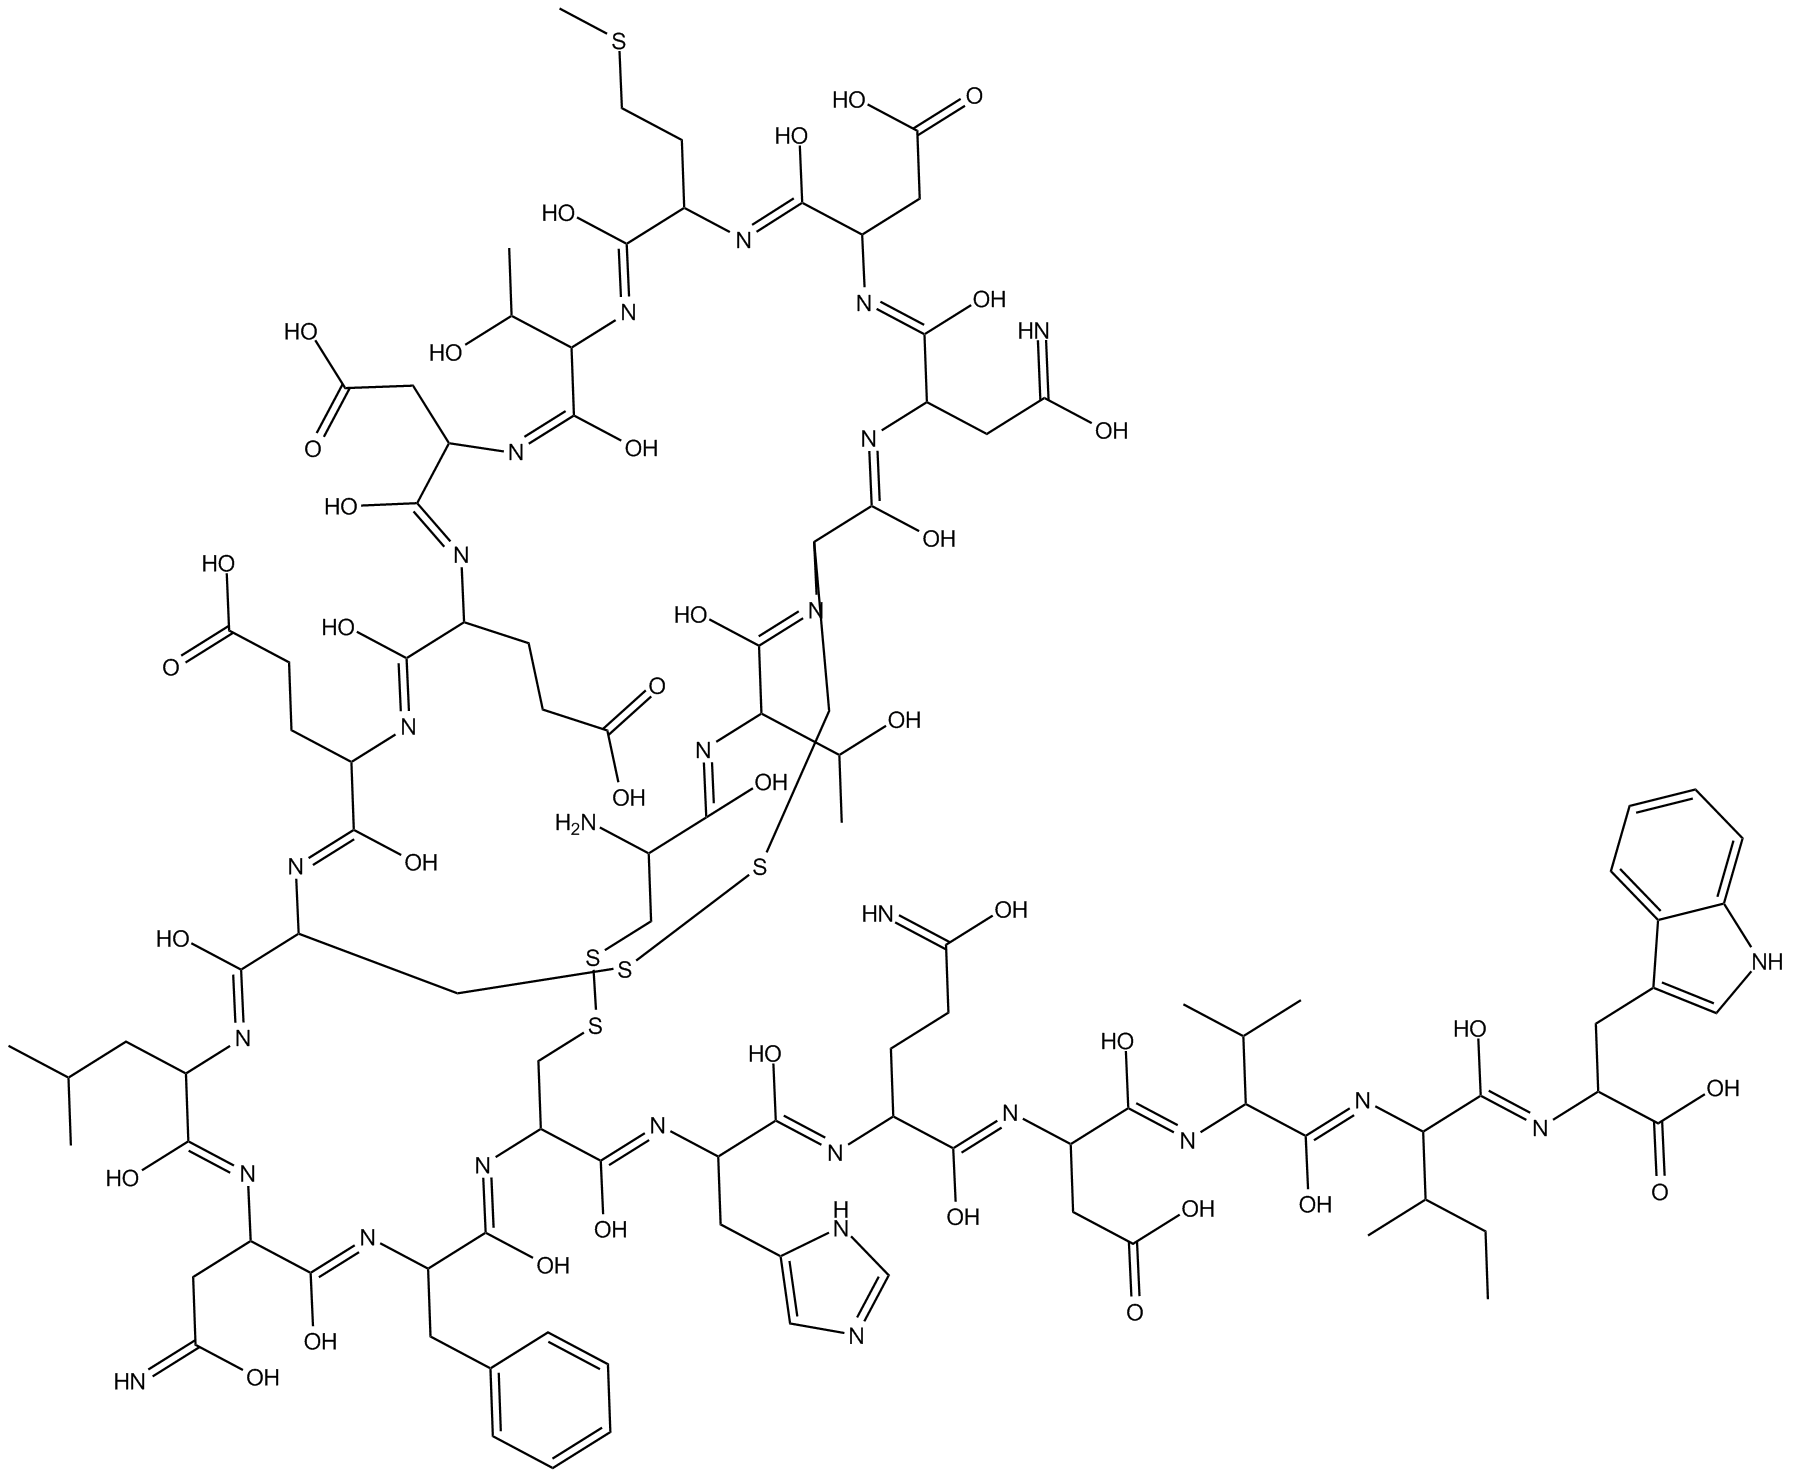 Sarafotoxin S6c